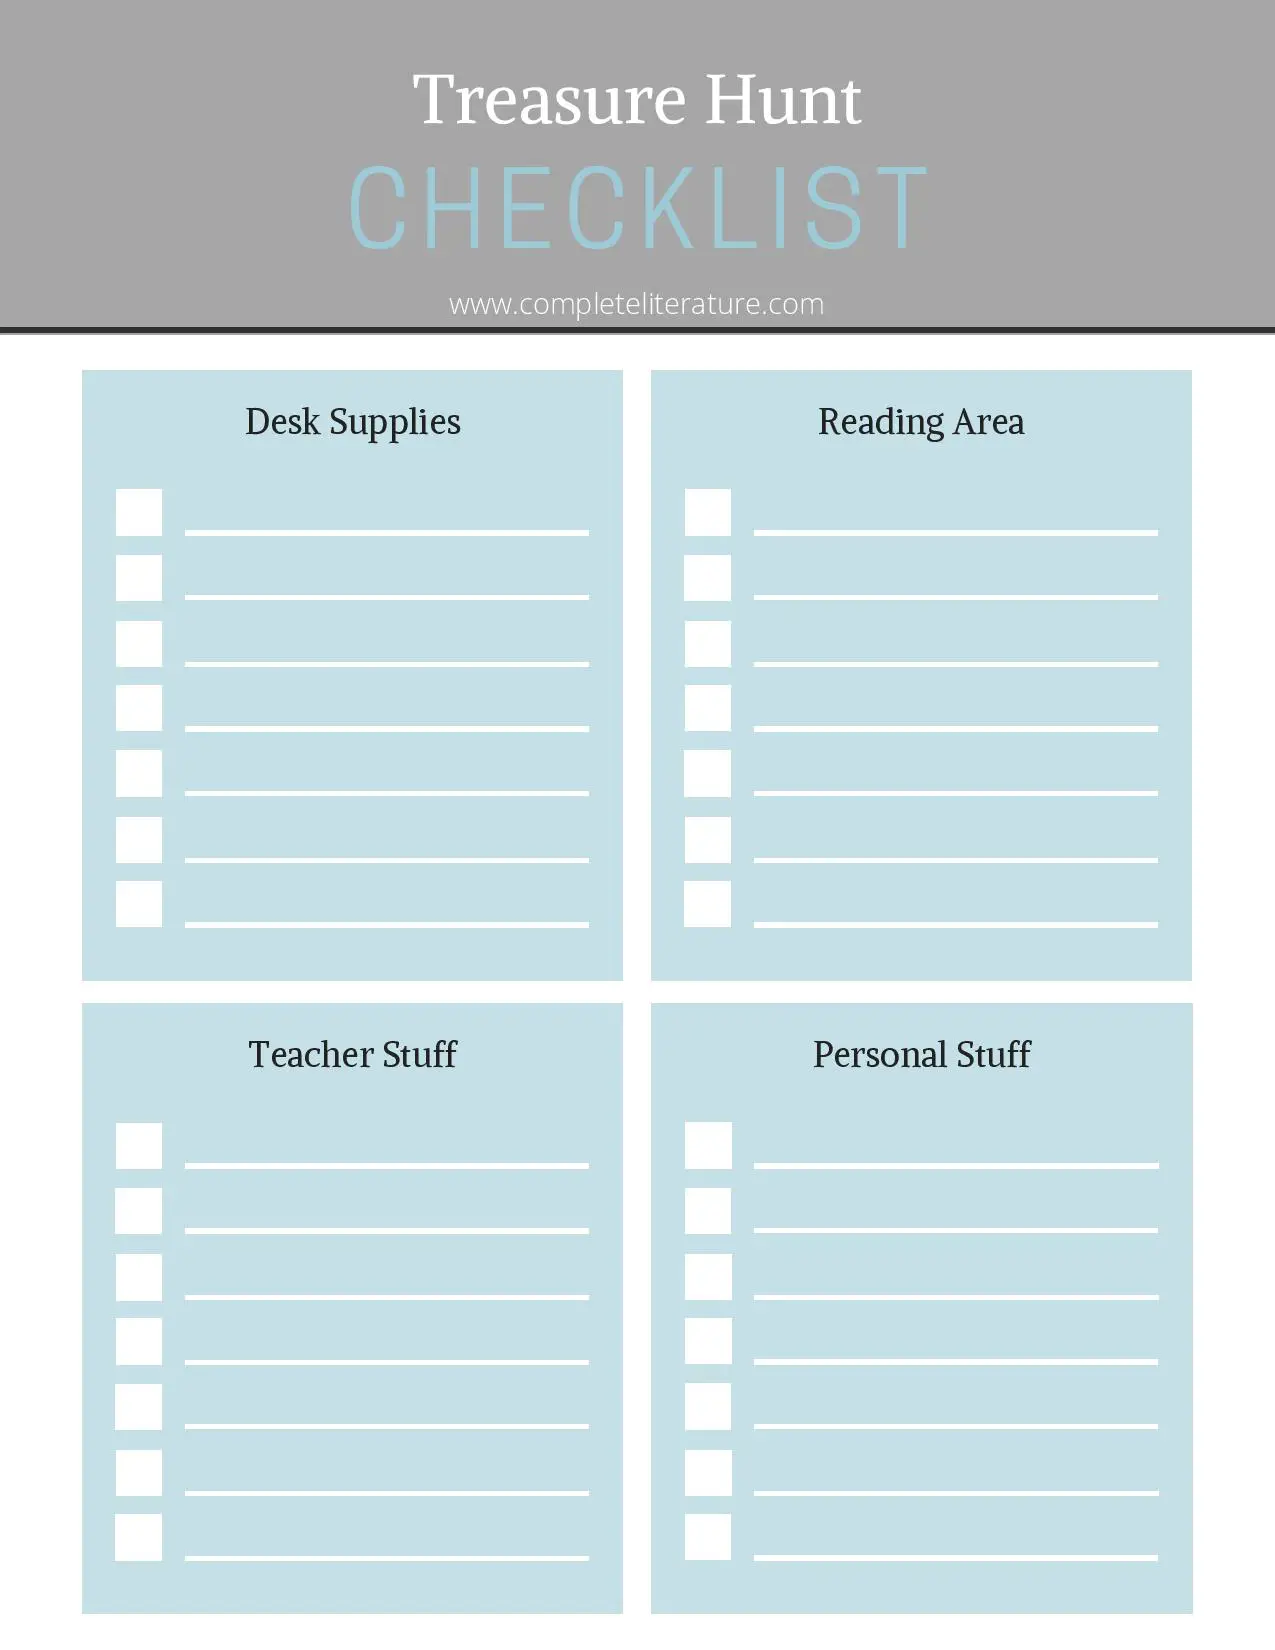 Treasure hunt checklist blank